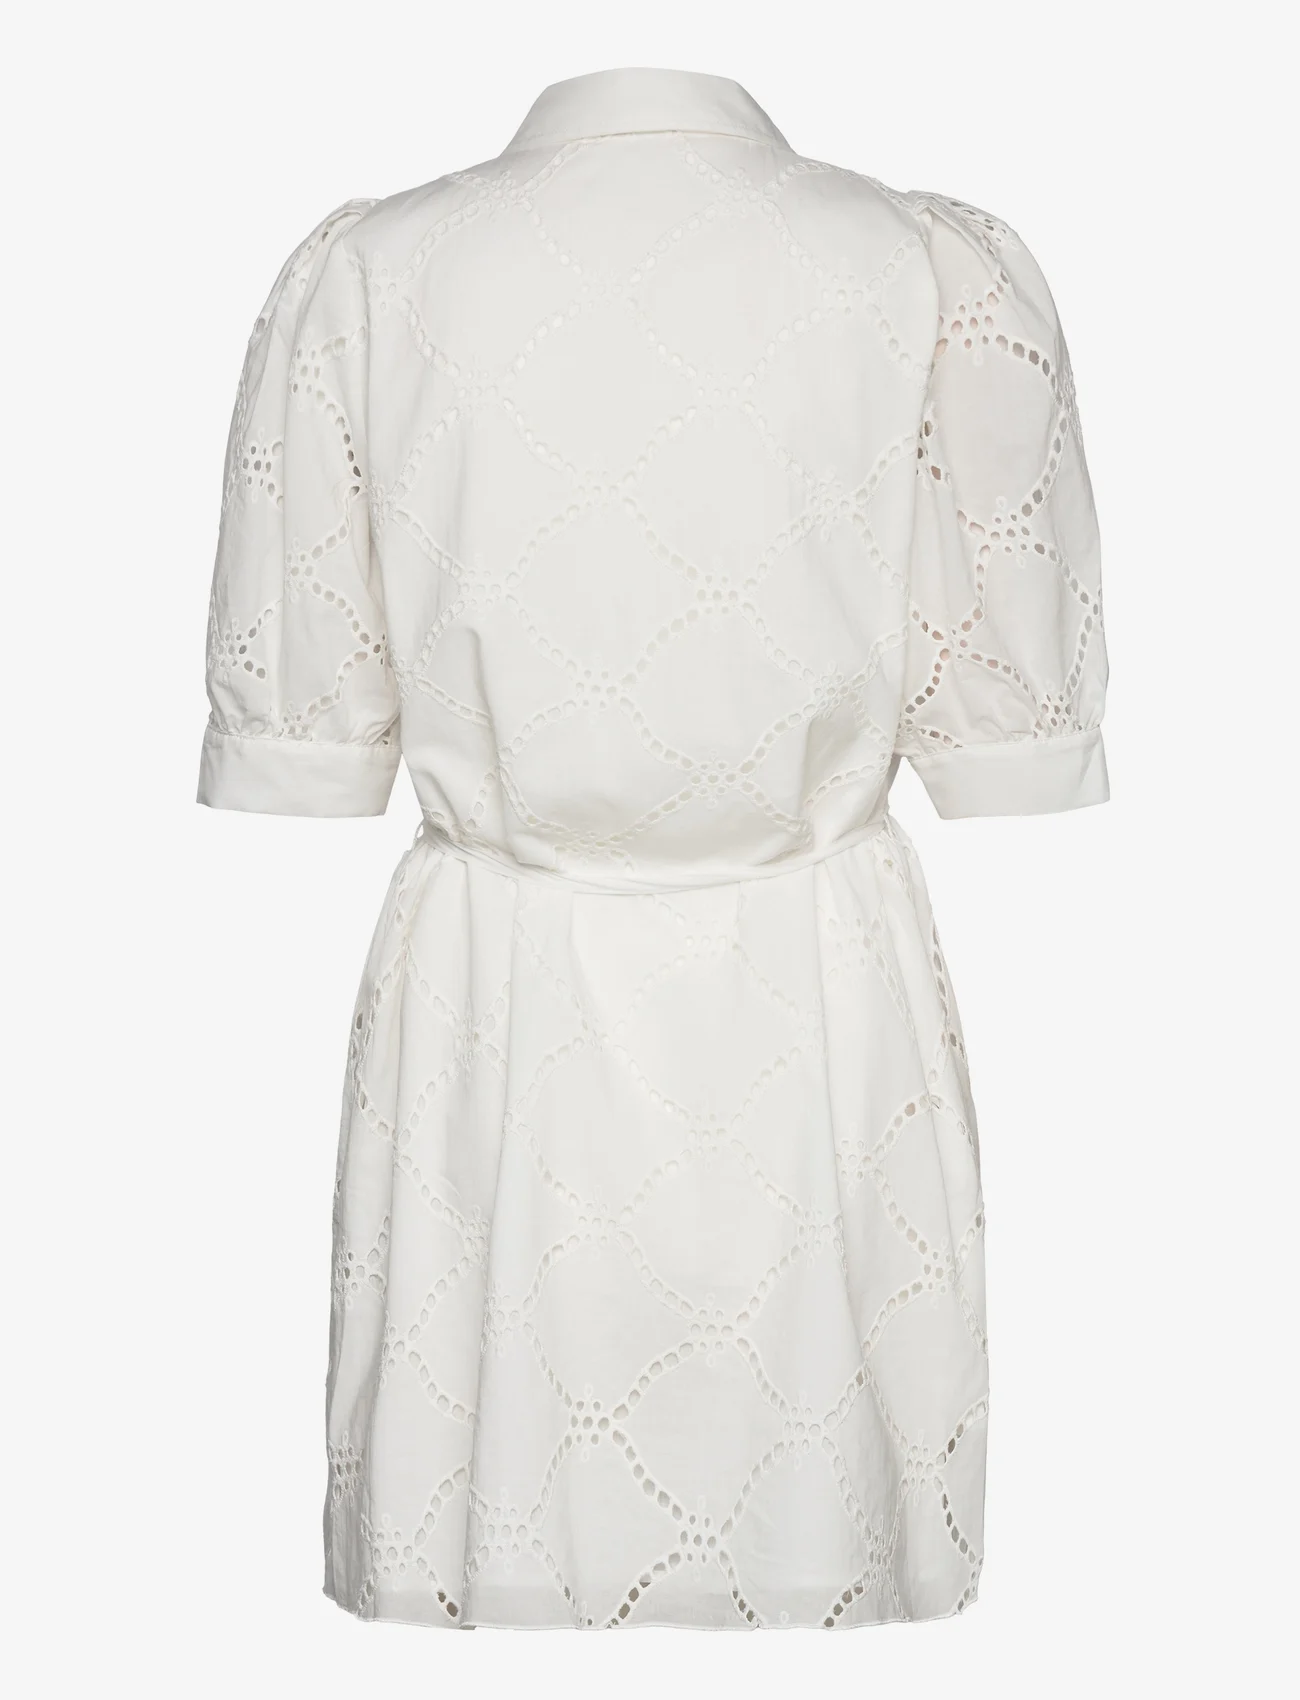 Twist & Tango - Trisha Dress - festtøj til outletpriser - white - 1